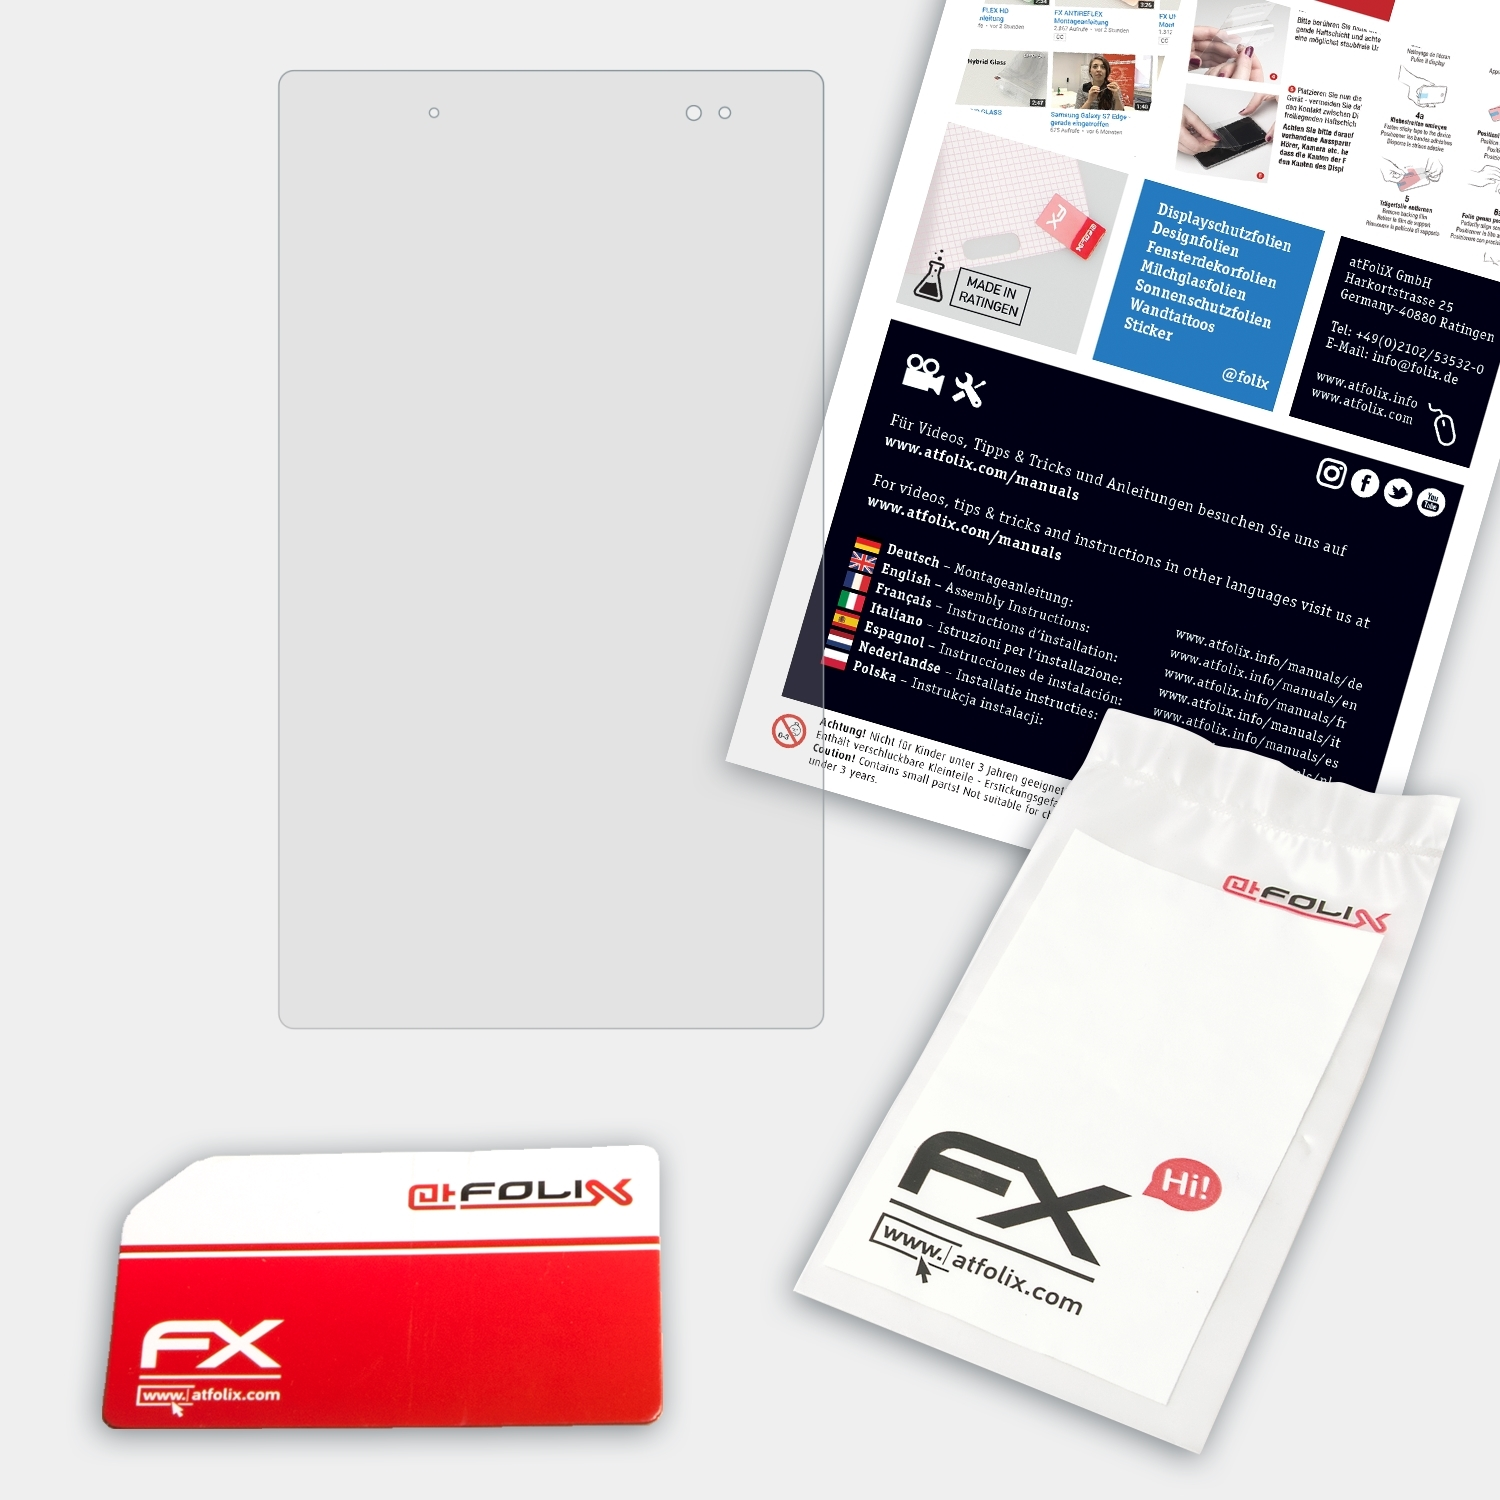 Tablet Compact) ATFOLIX Z3 Sony Schutzglas(für FX-Hybrid-Glass Xperia